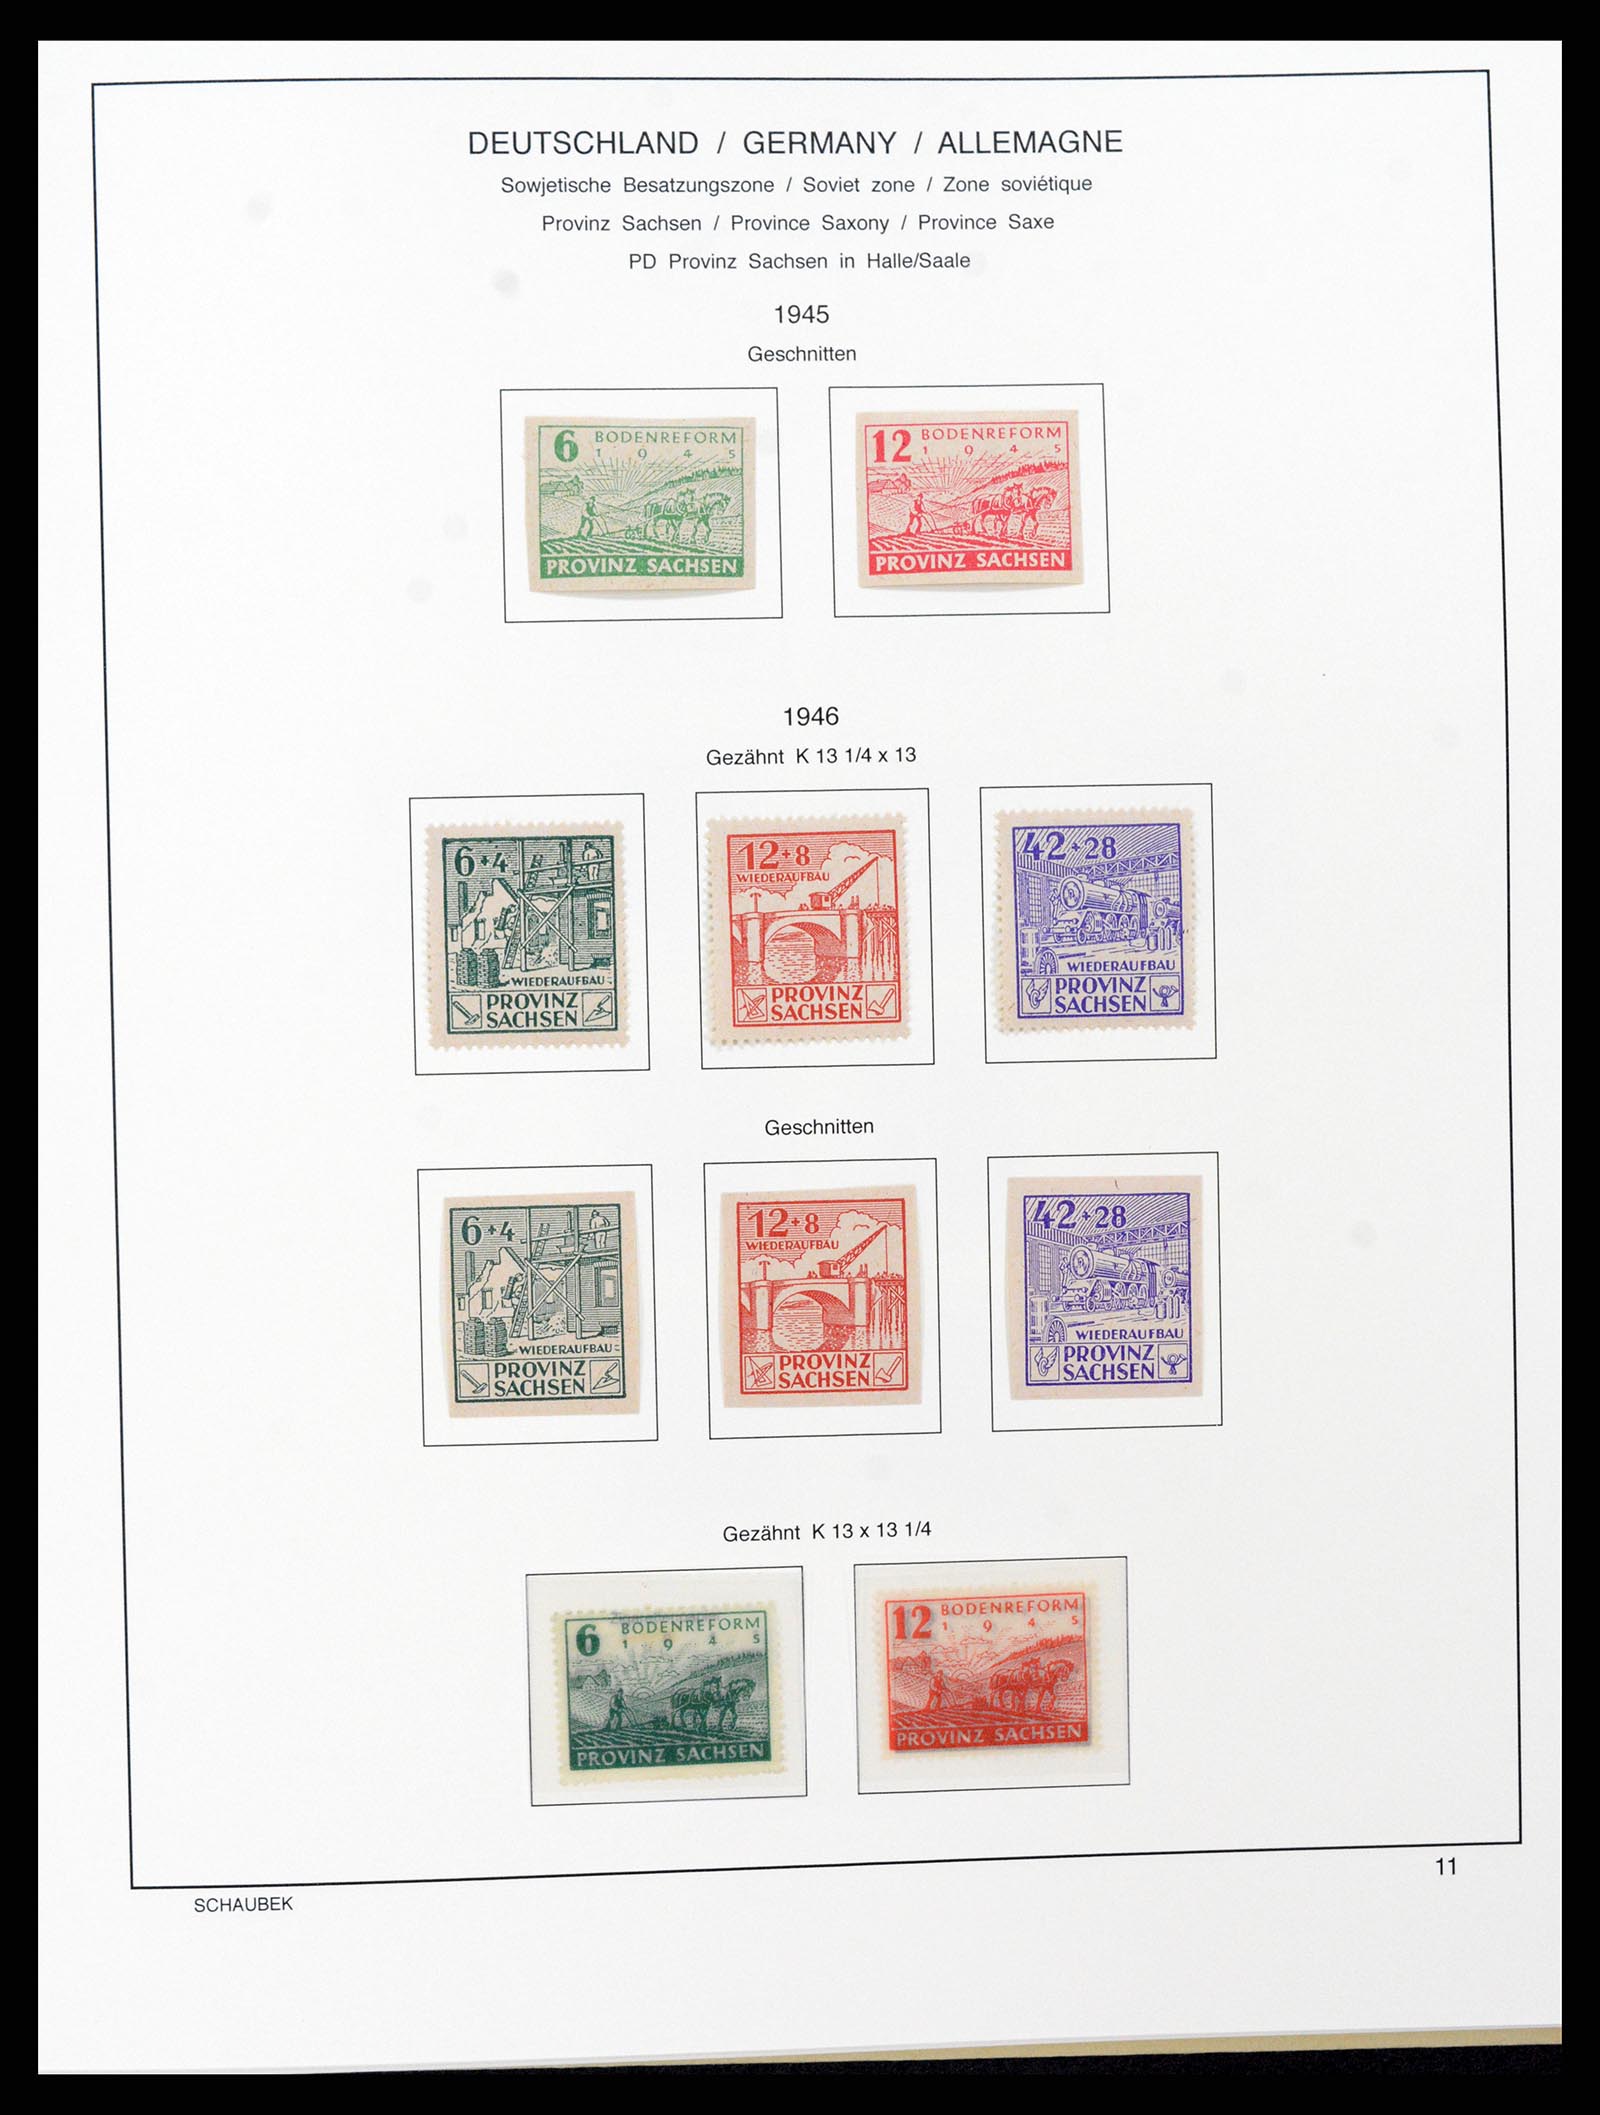 37645 029 - Stamp collection 37645 German Zones 1945-1949.